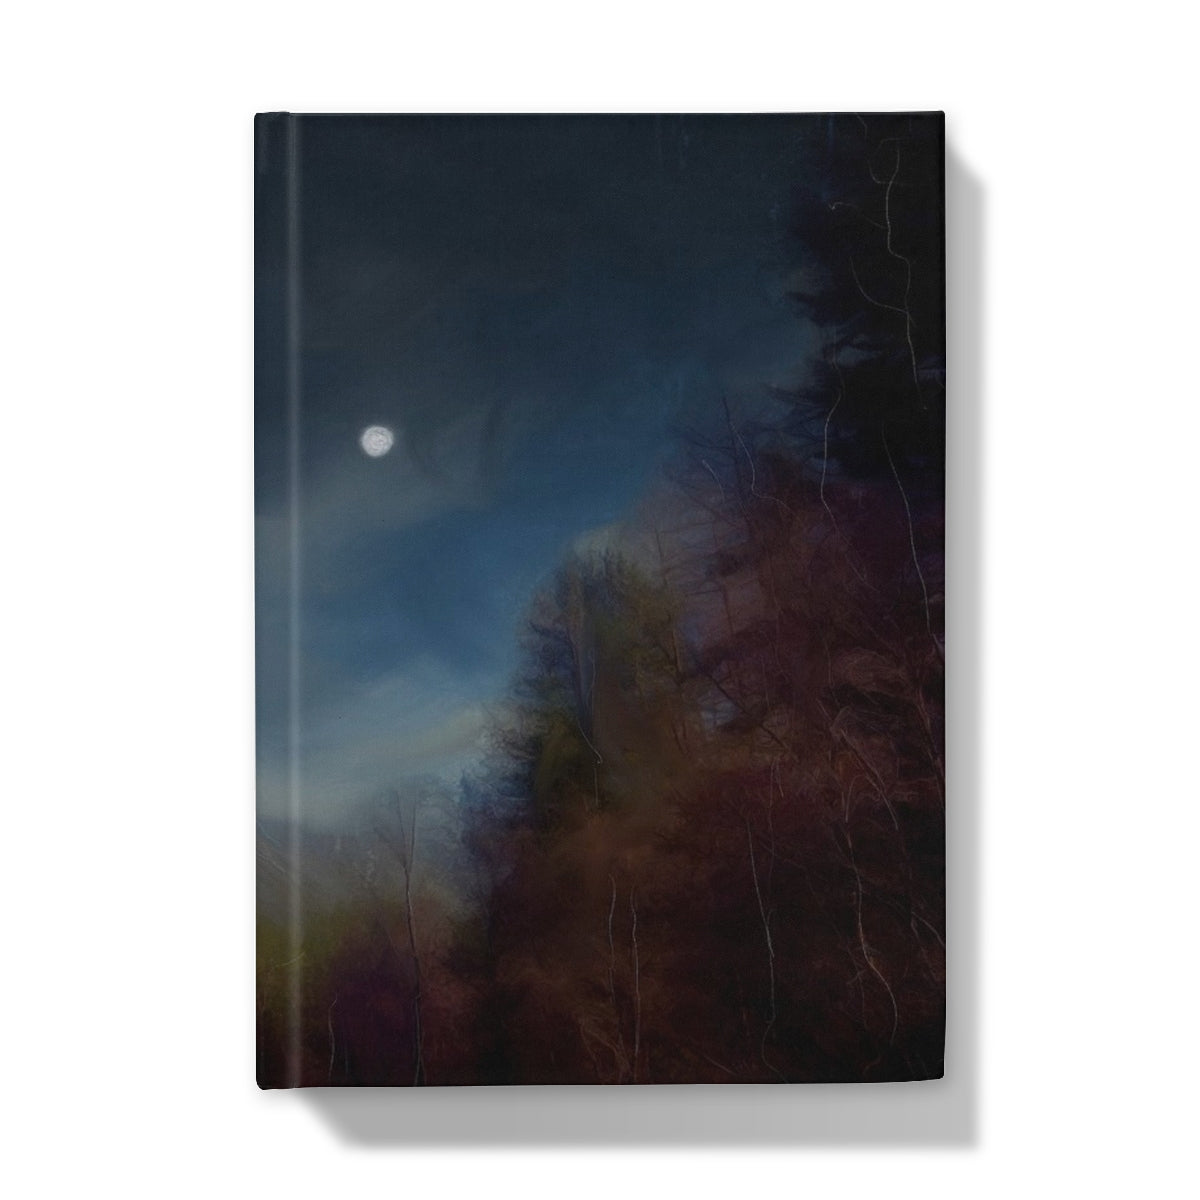 Glencoe Lochan Moonlight Art Gifts Hardback Journal-Journals & Notebooks-Scottish Lochs & Mountains Art Gallery-A5-Plain-Paintings, Prints, Homeware, Art Gifts From Scotland By Scottish Artist Kevin Hunter